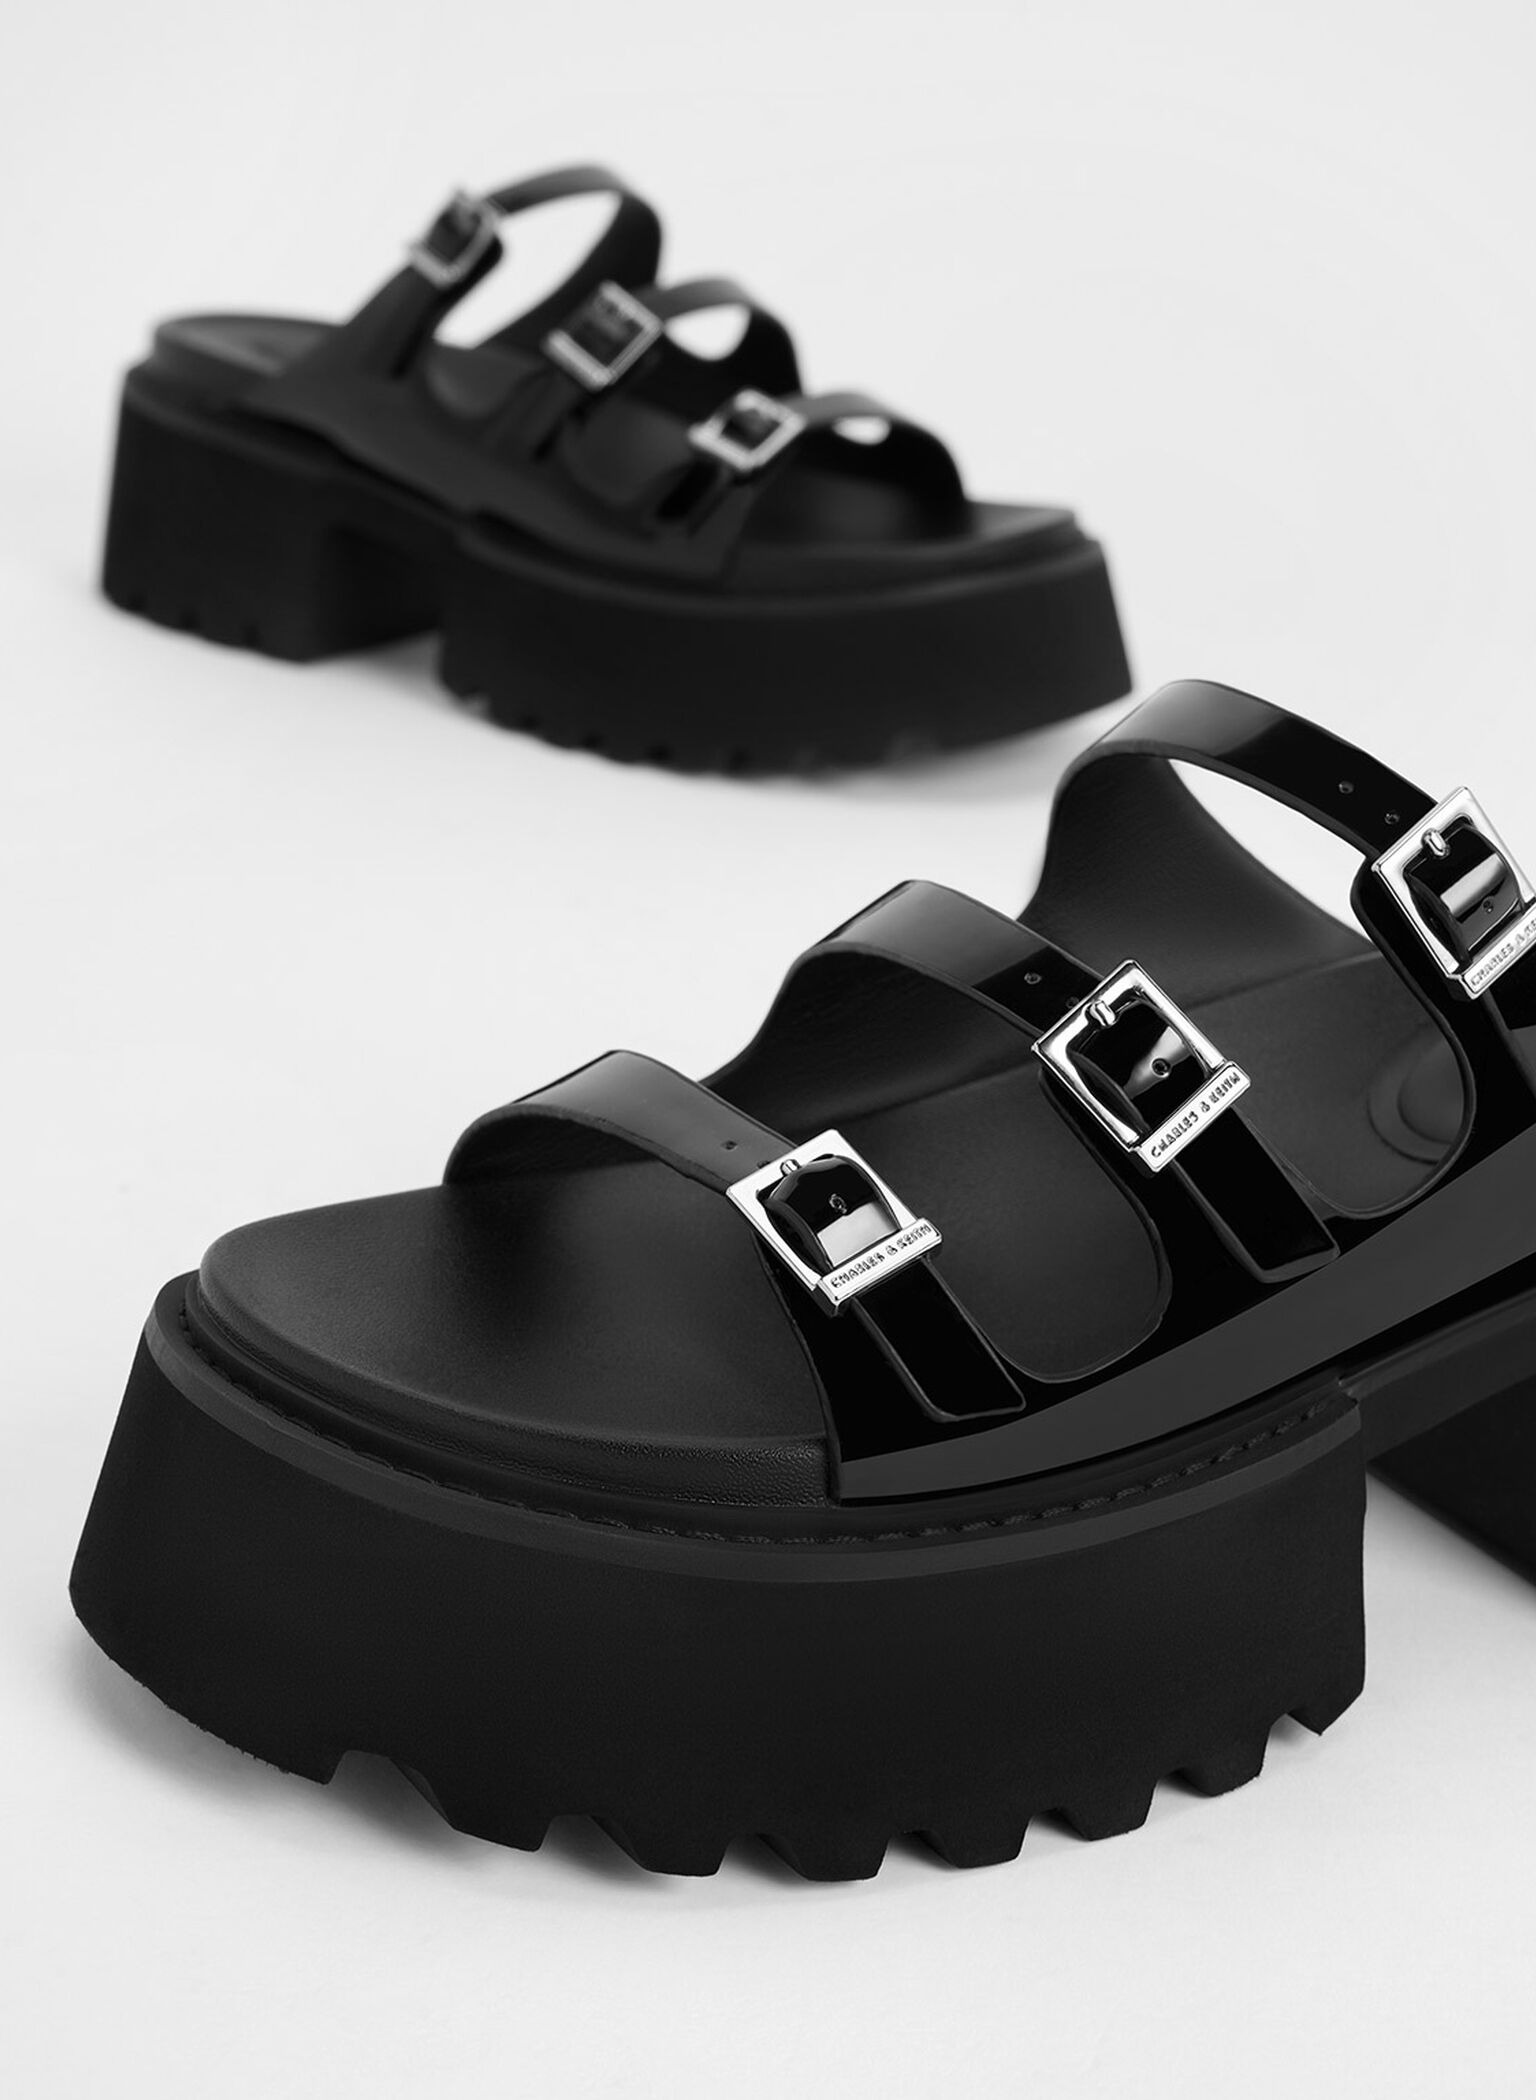 Nadine Patent Triple-Strap Platform Sandals, Black Patent, hi-res